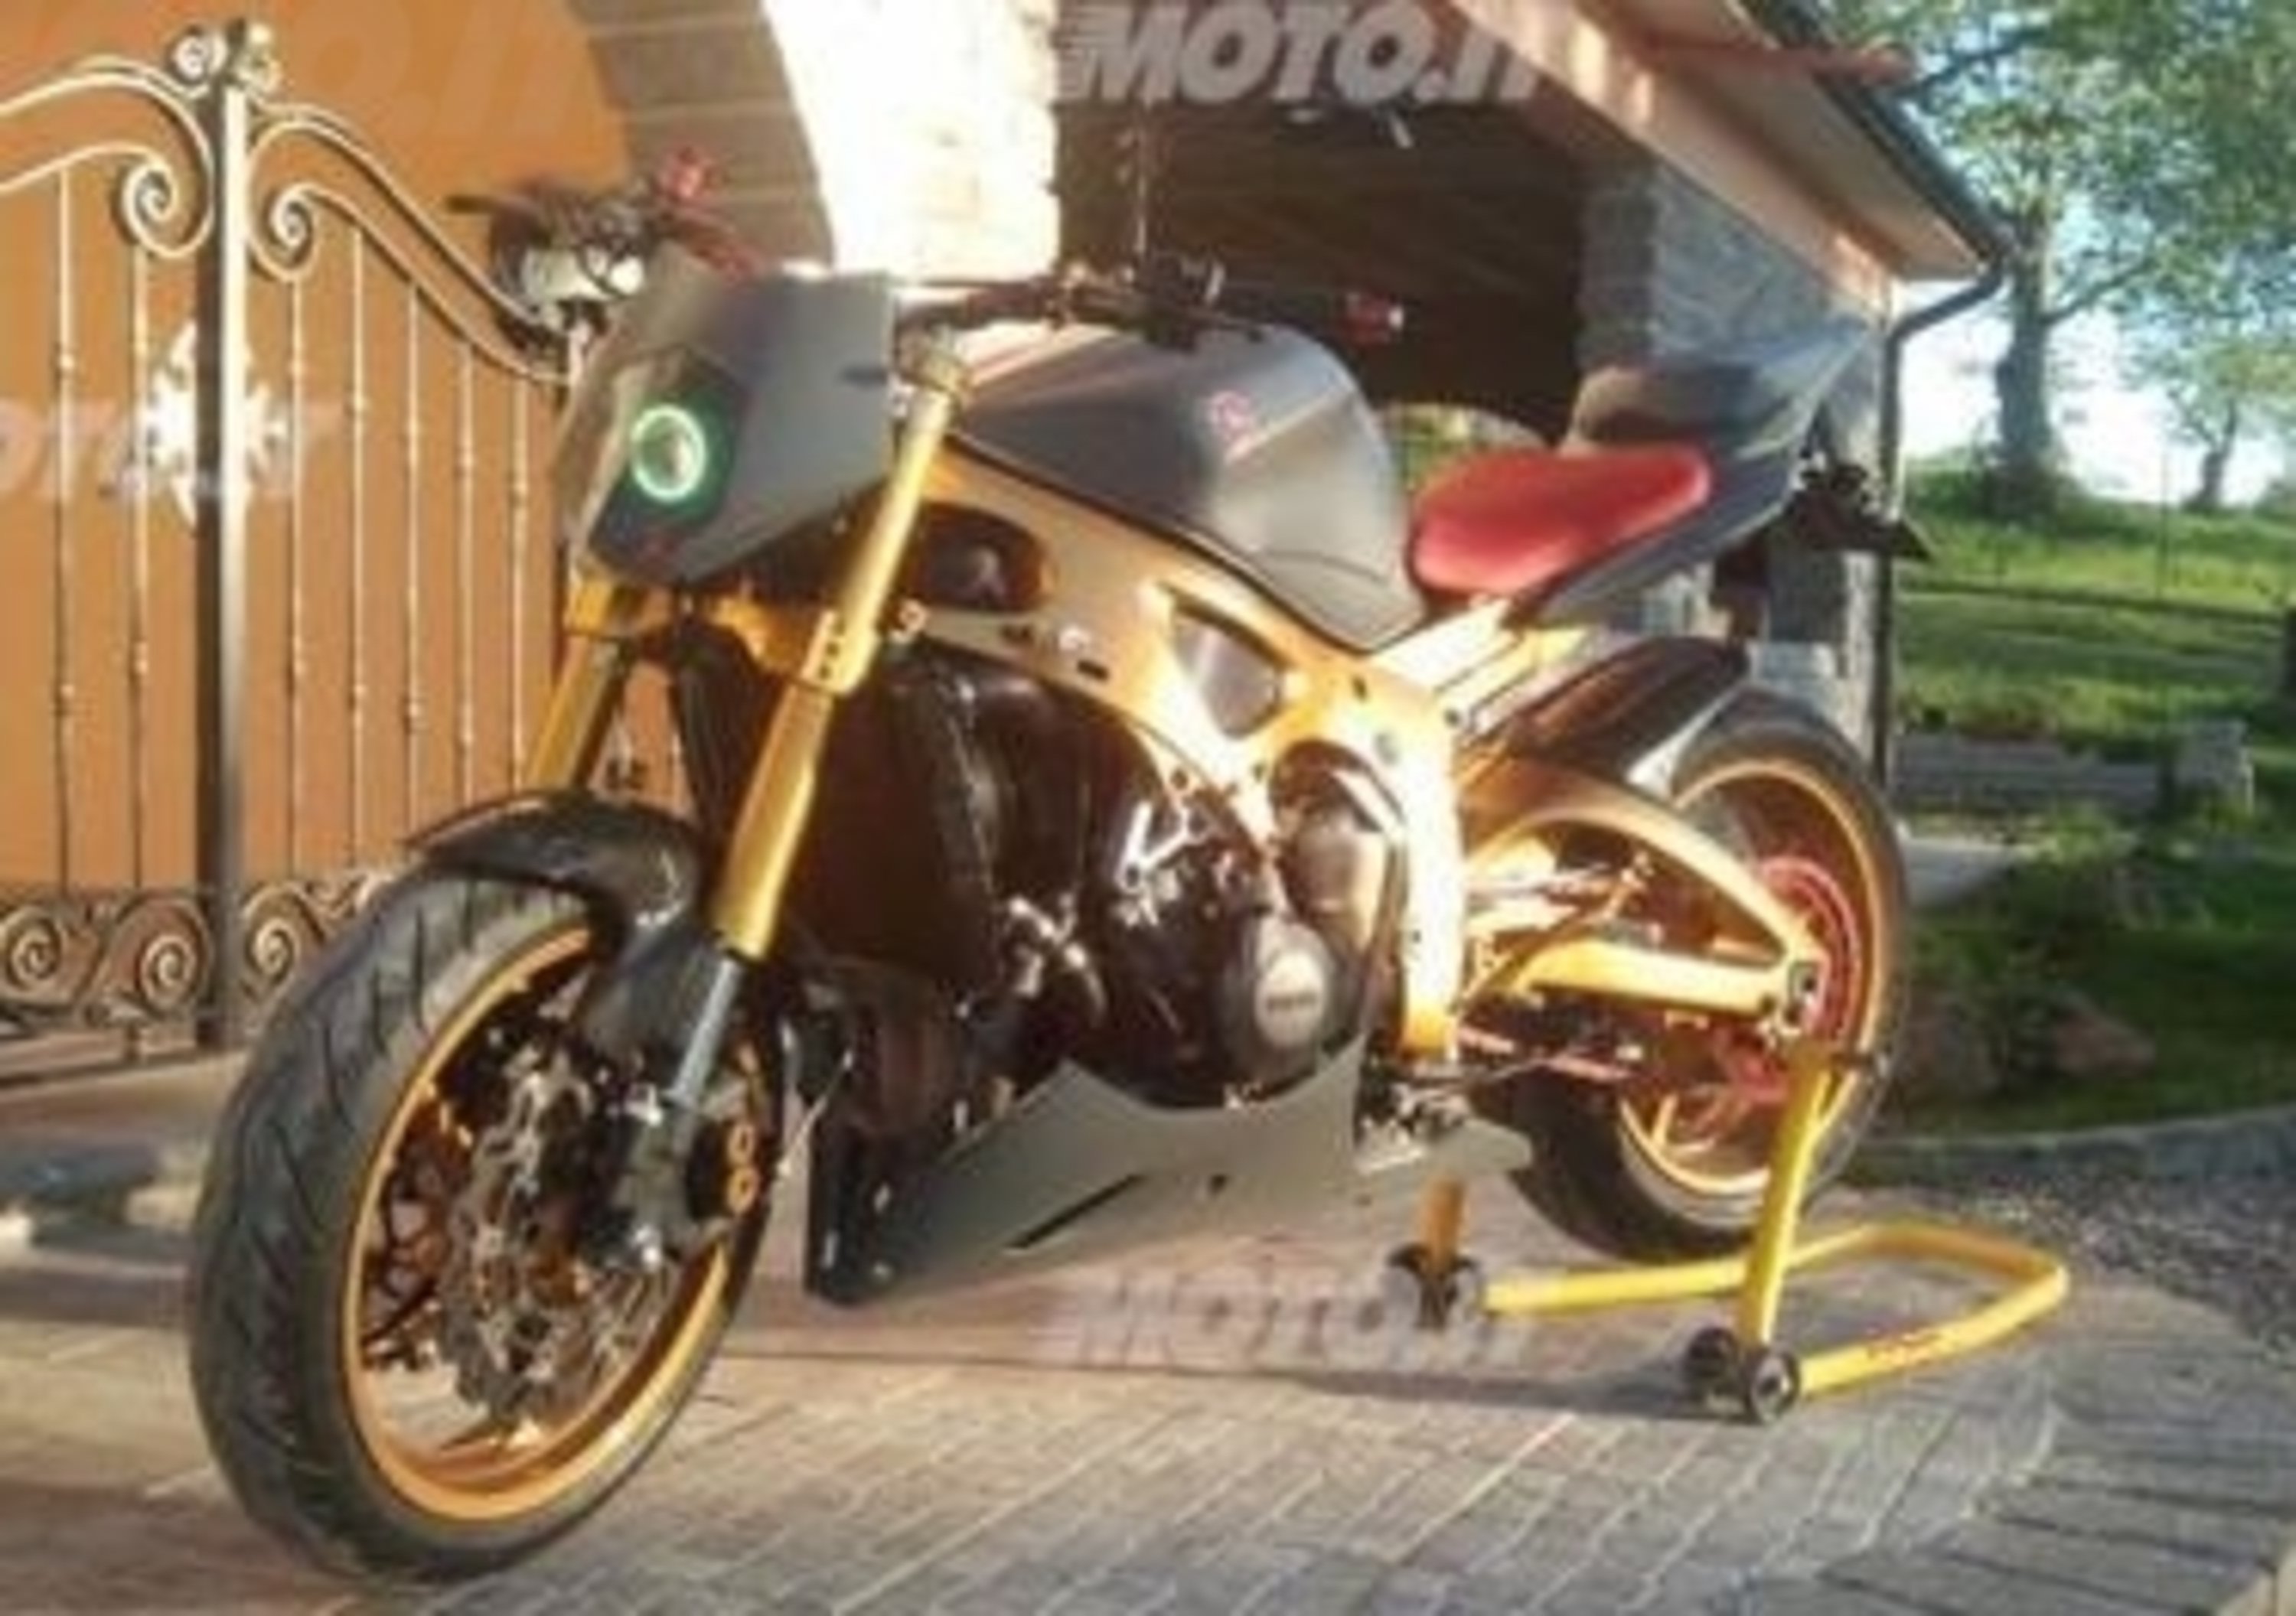 Le Strane di Moto.it: Yamaha R6 naked